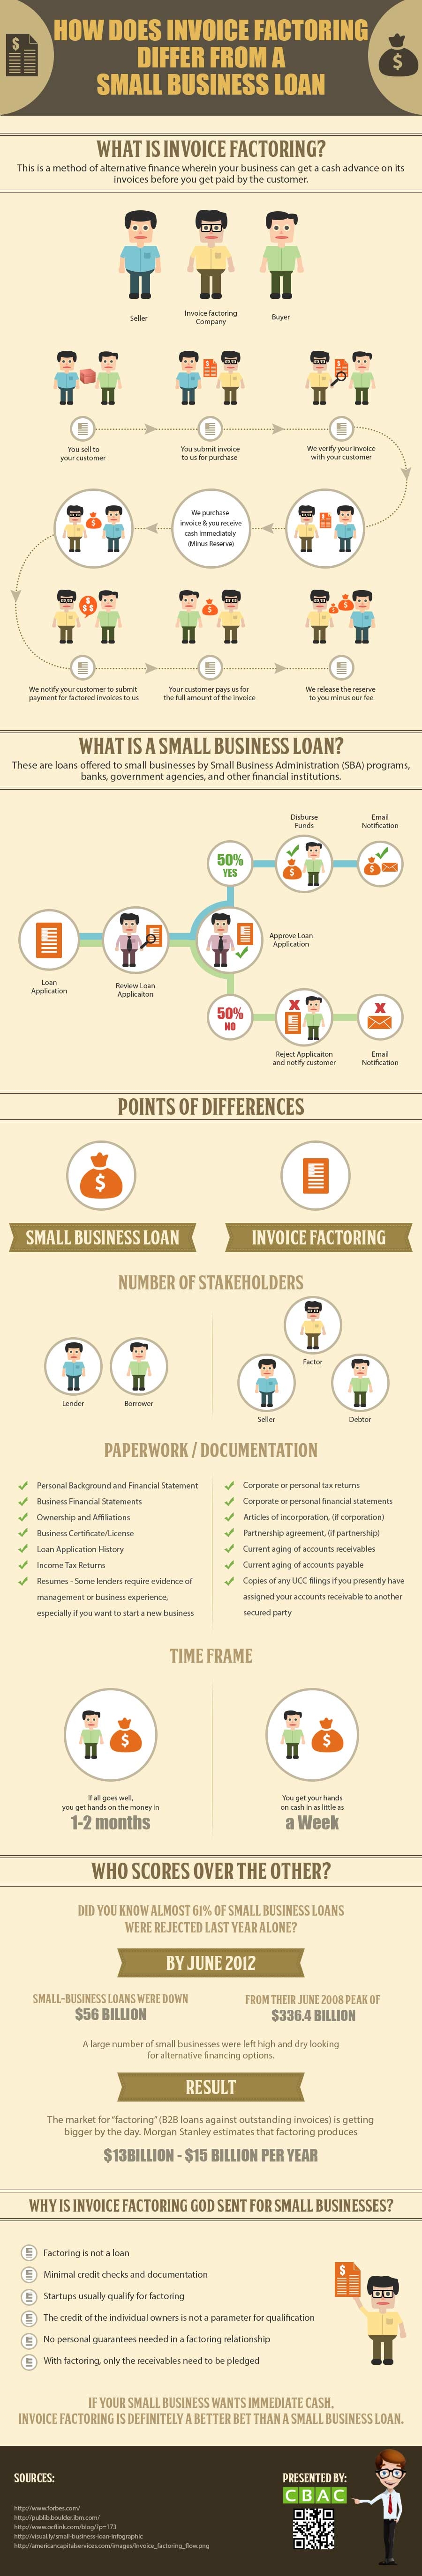 infographic invoice factoring vs small business loan differences invoice factoring for small business